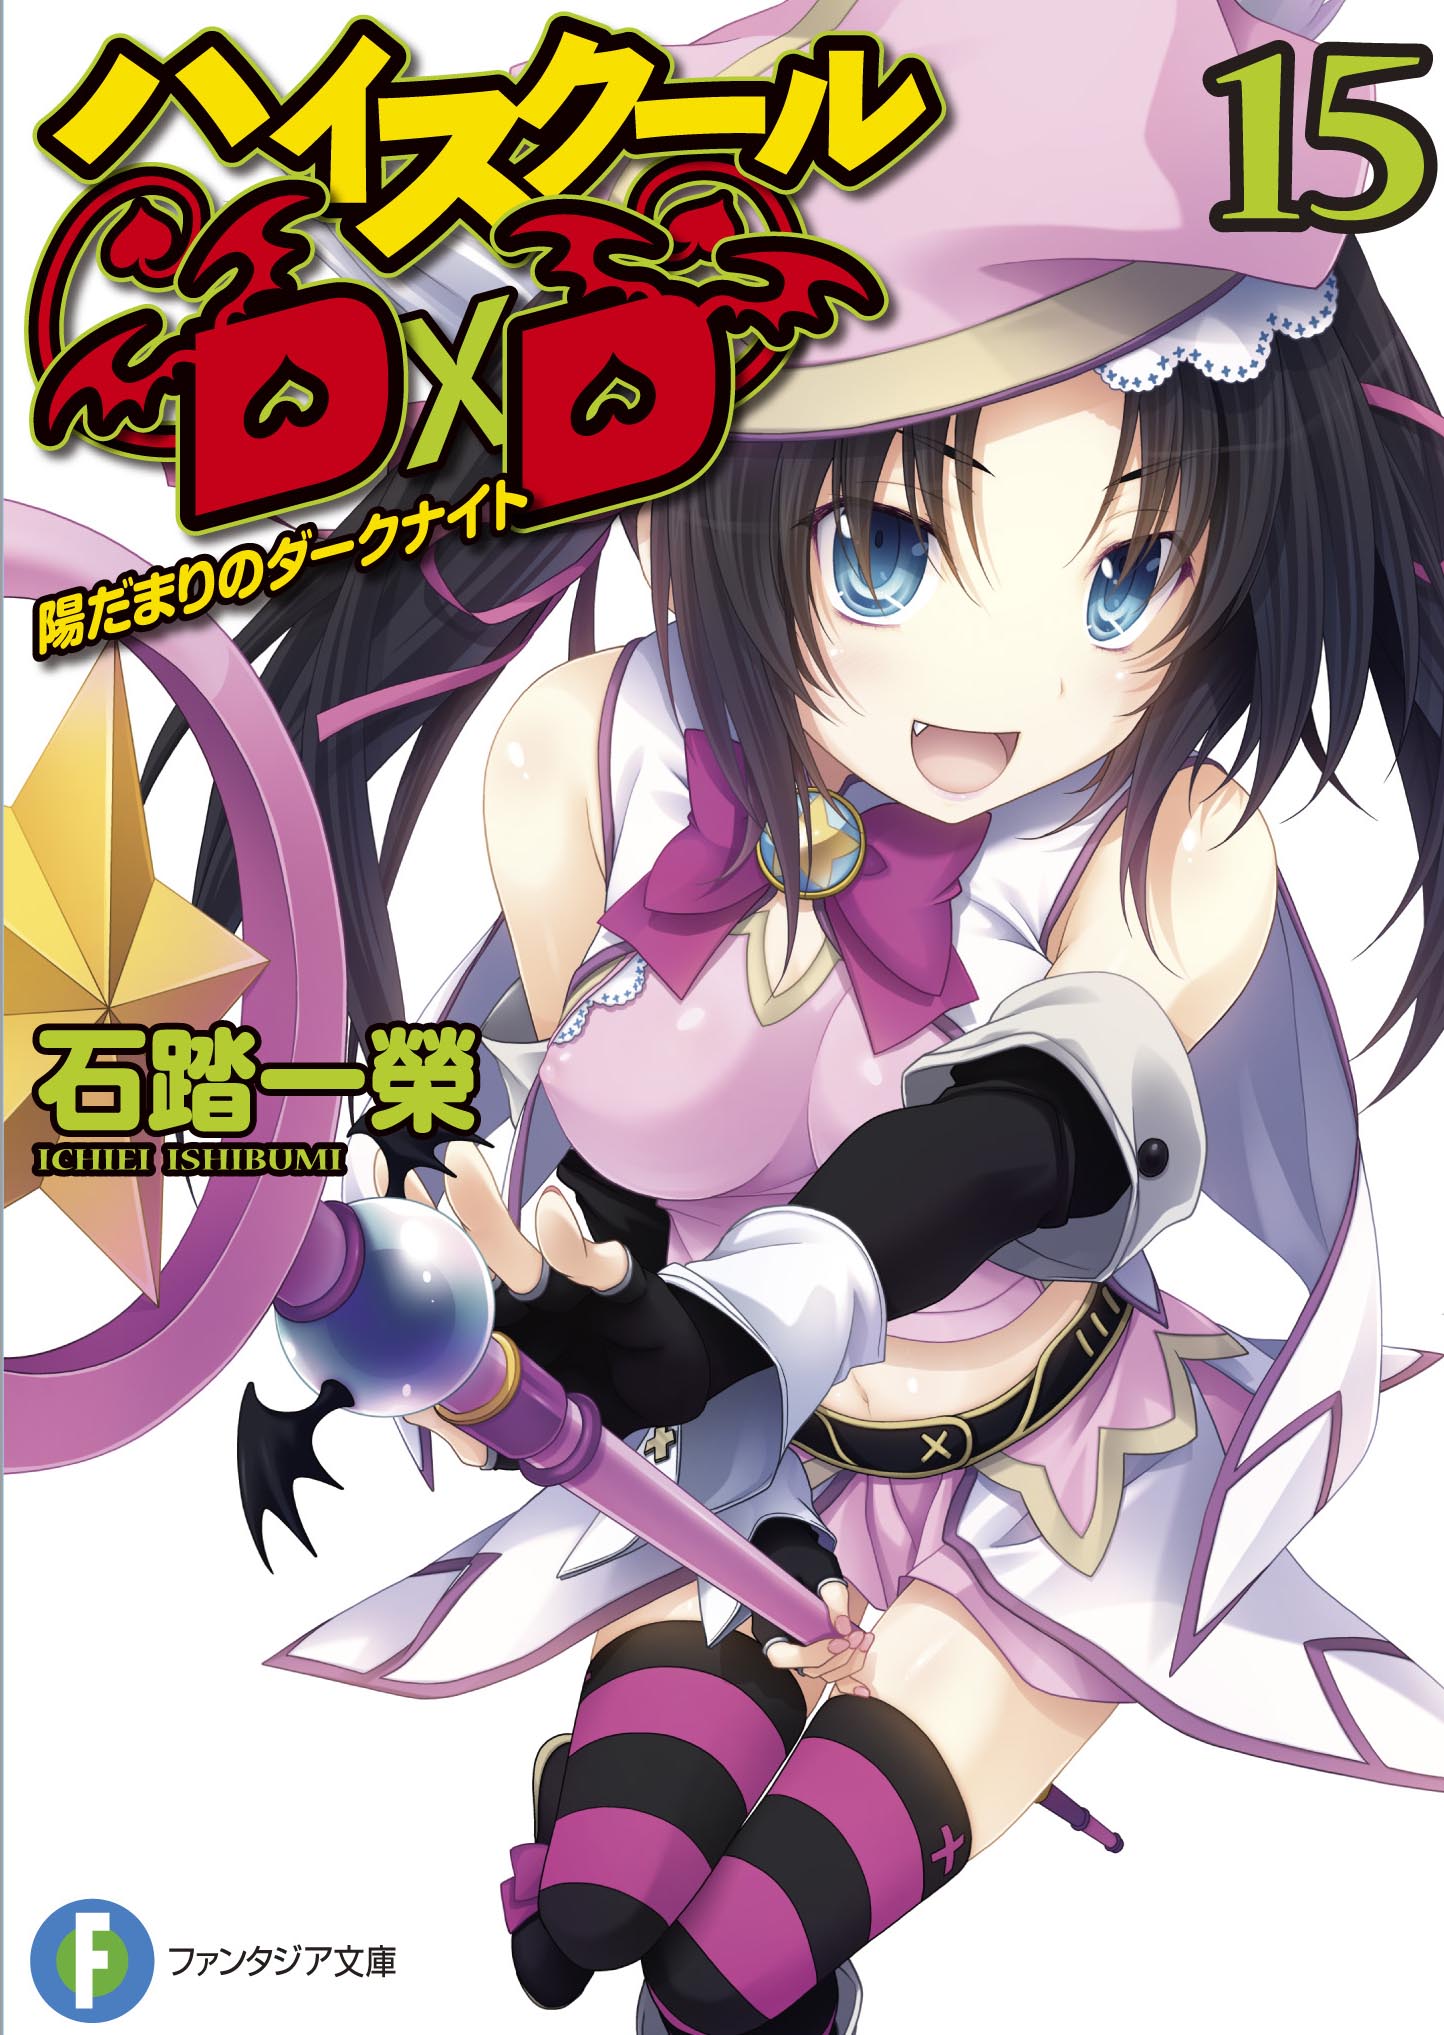 High School DxD manga Series by Ichiei Ishibumi